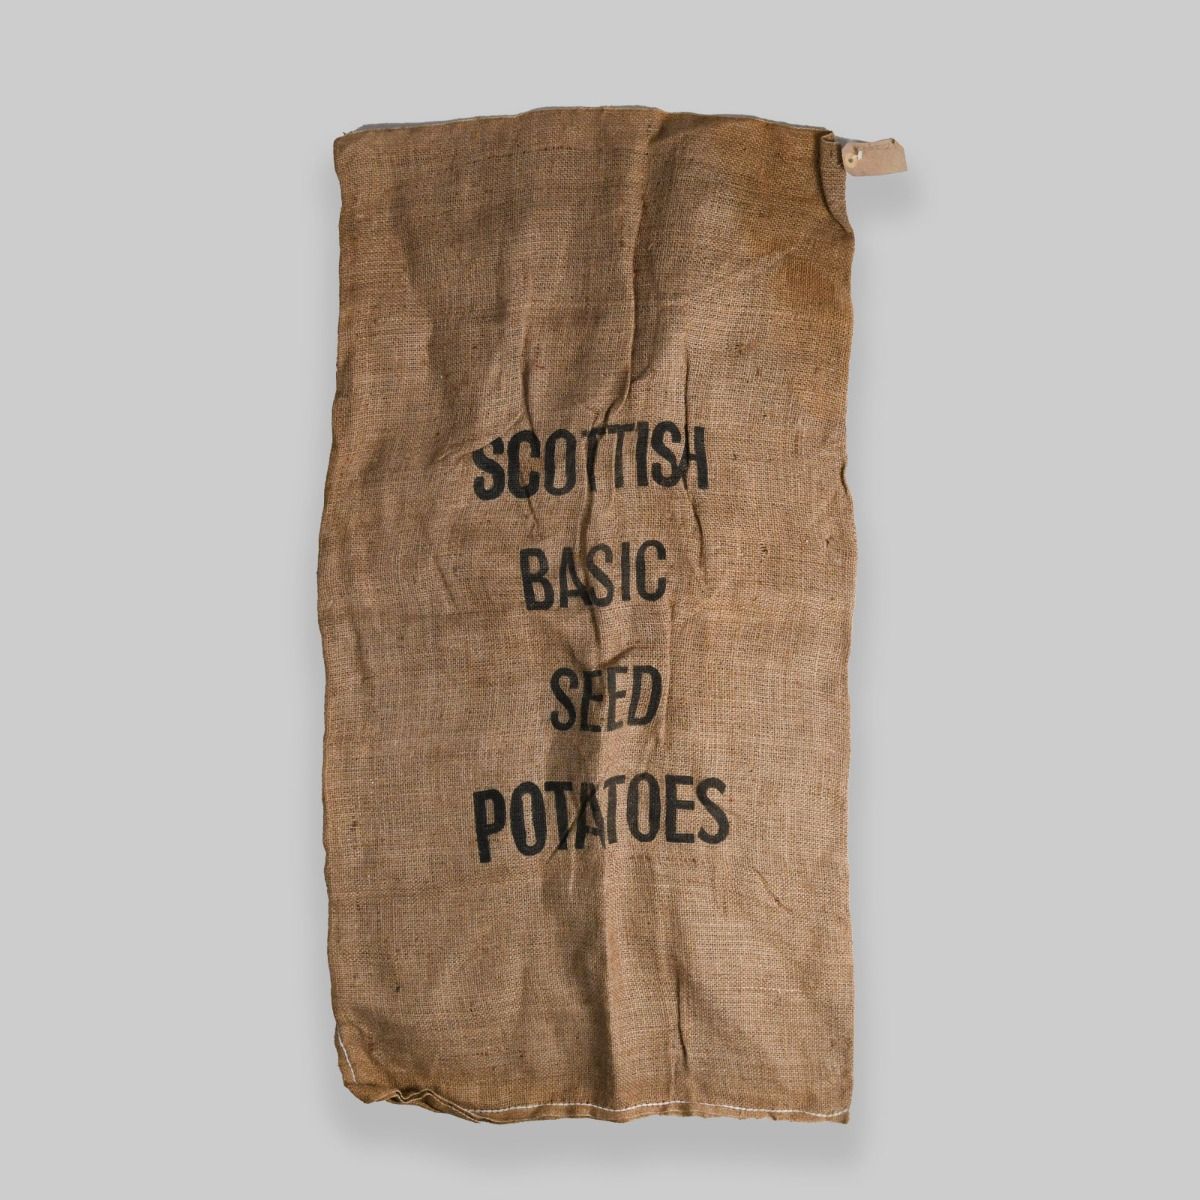 Vintage Hessian Scottish Potato Sack